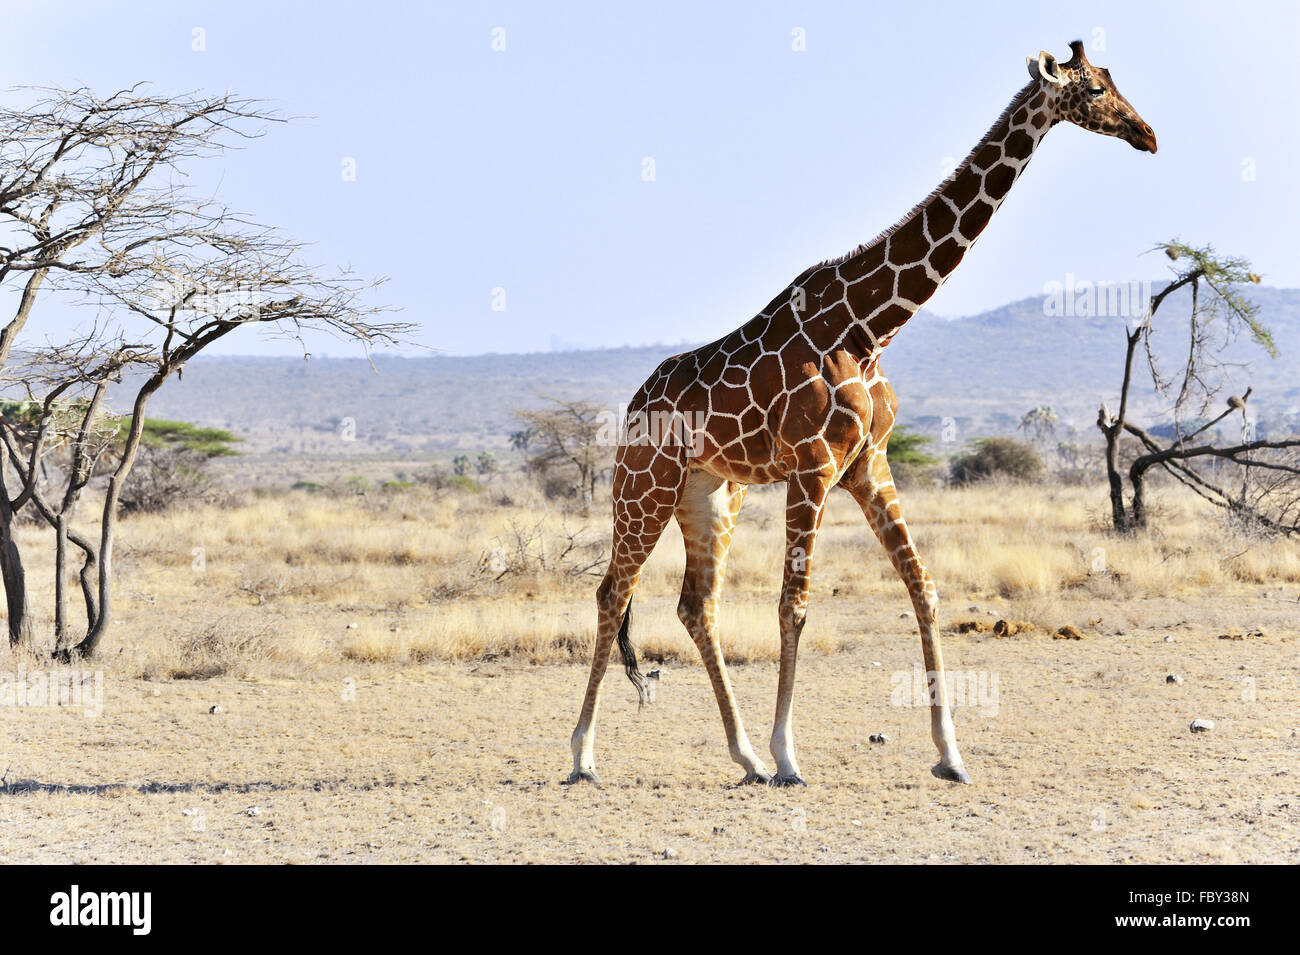 Reticulated Giraffe in Northern Kenya Stock Photo